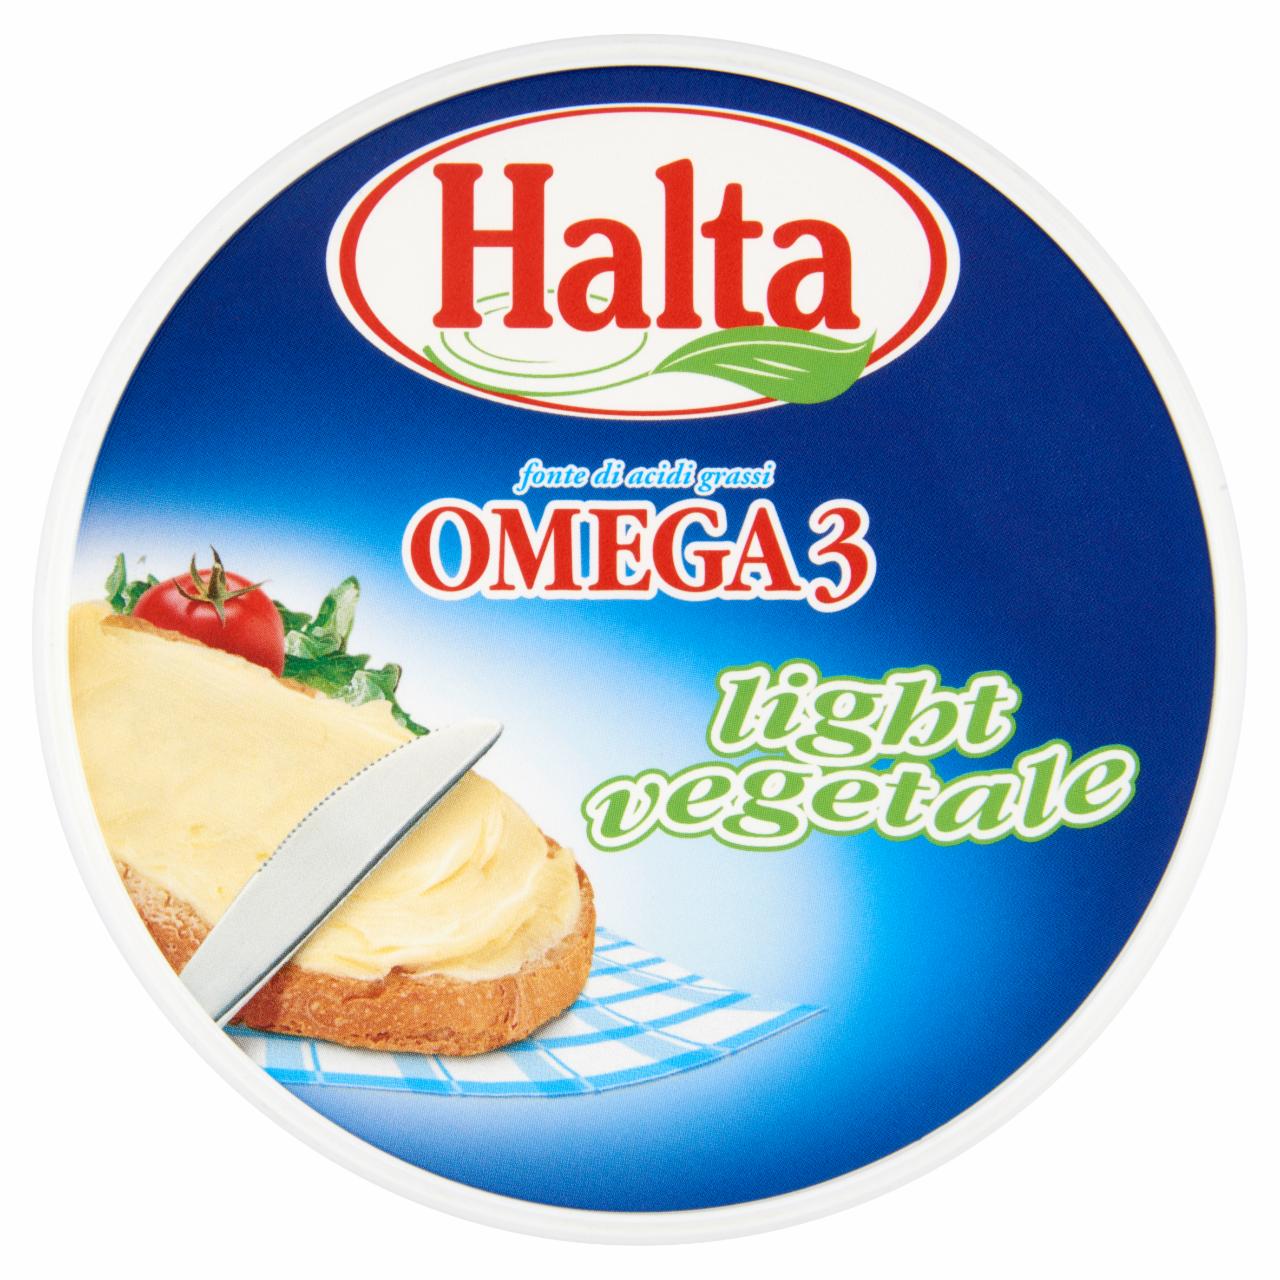 Képek - Halta Omega 3 light margarin 500 g